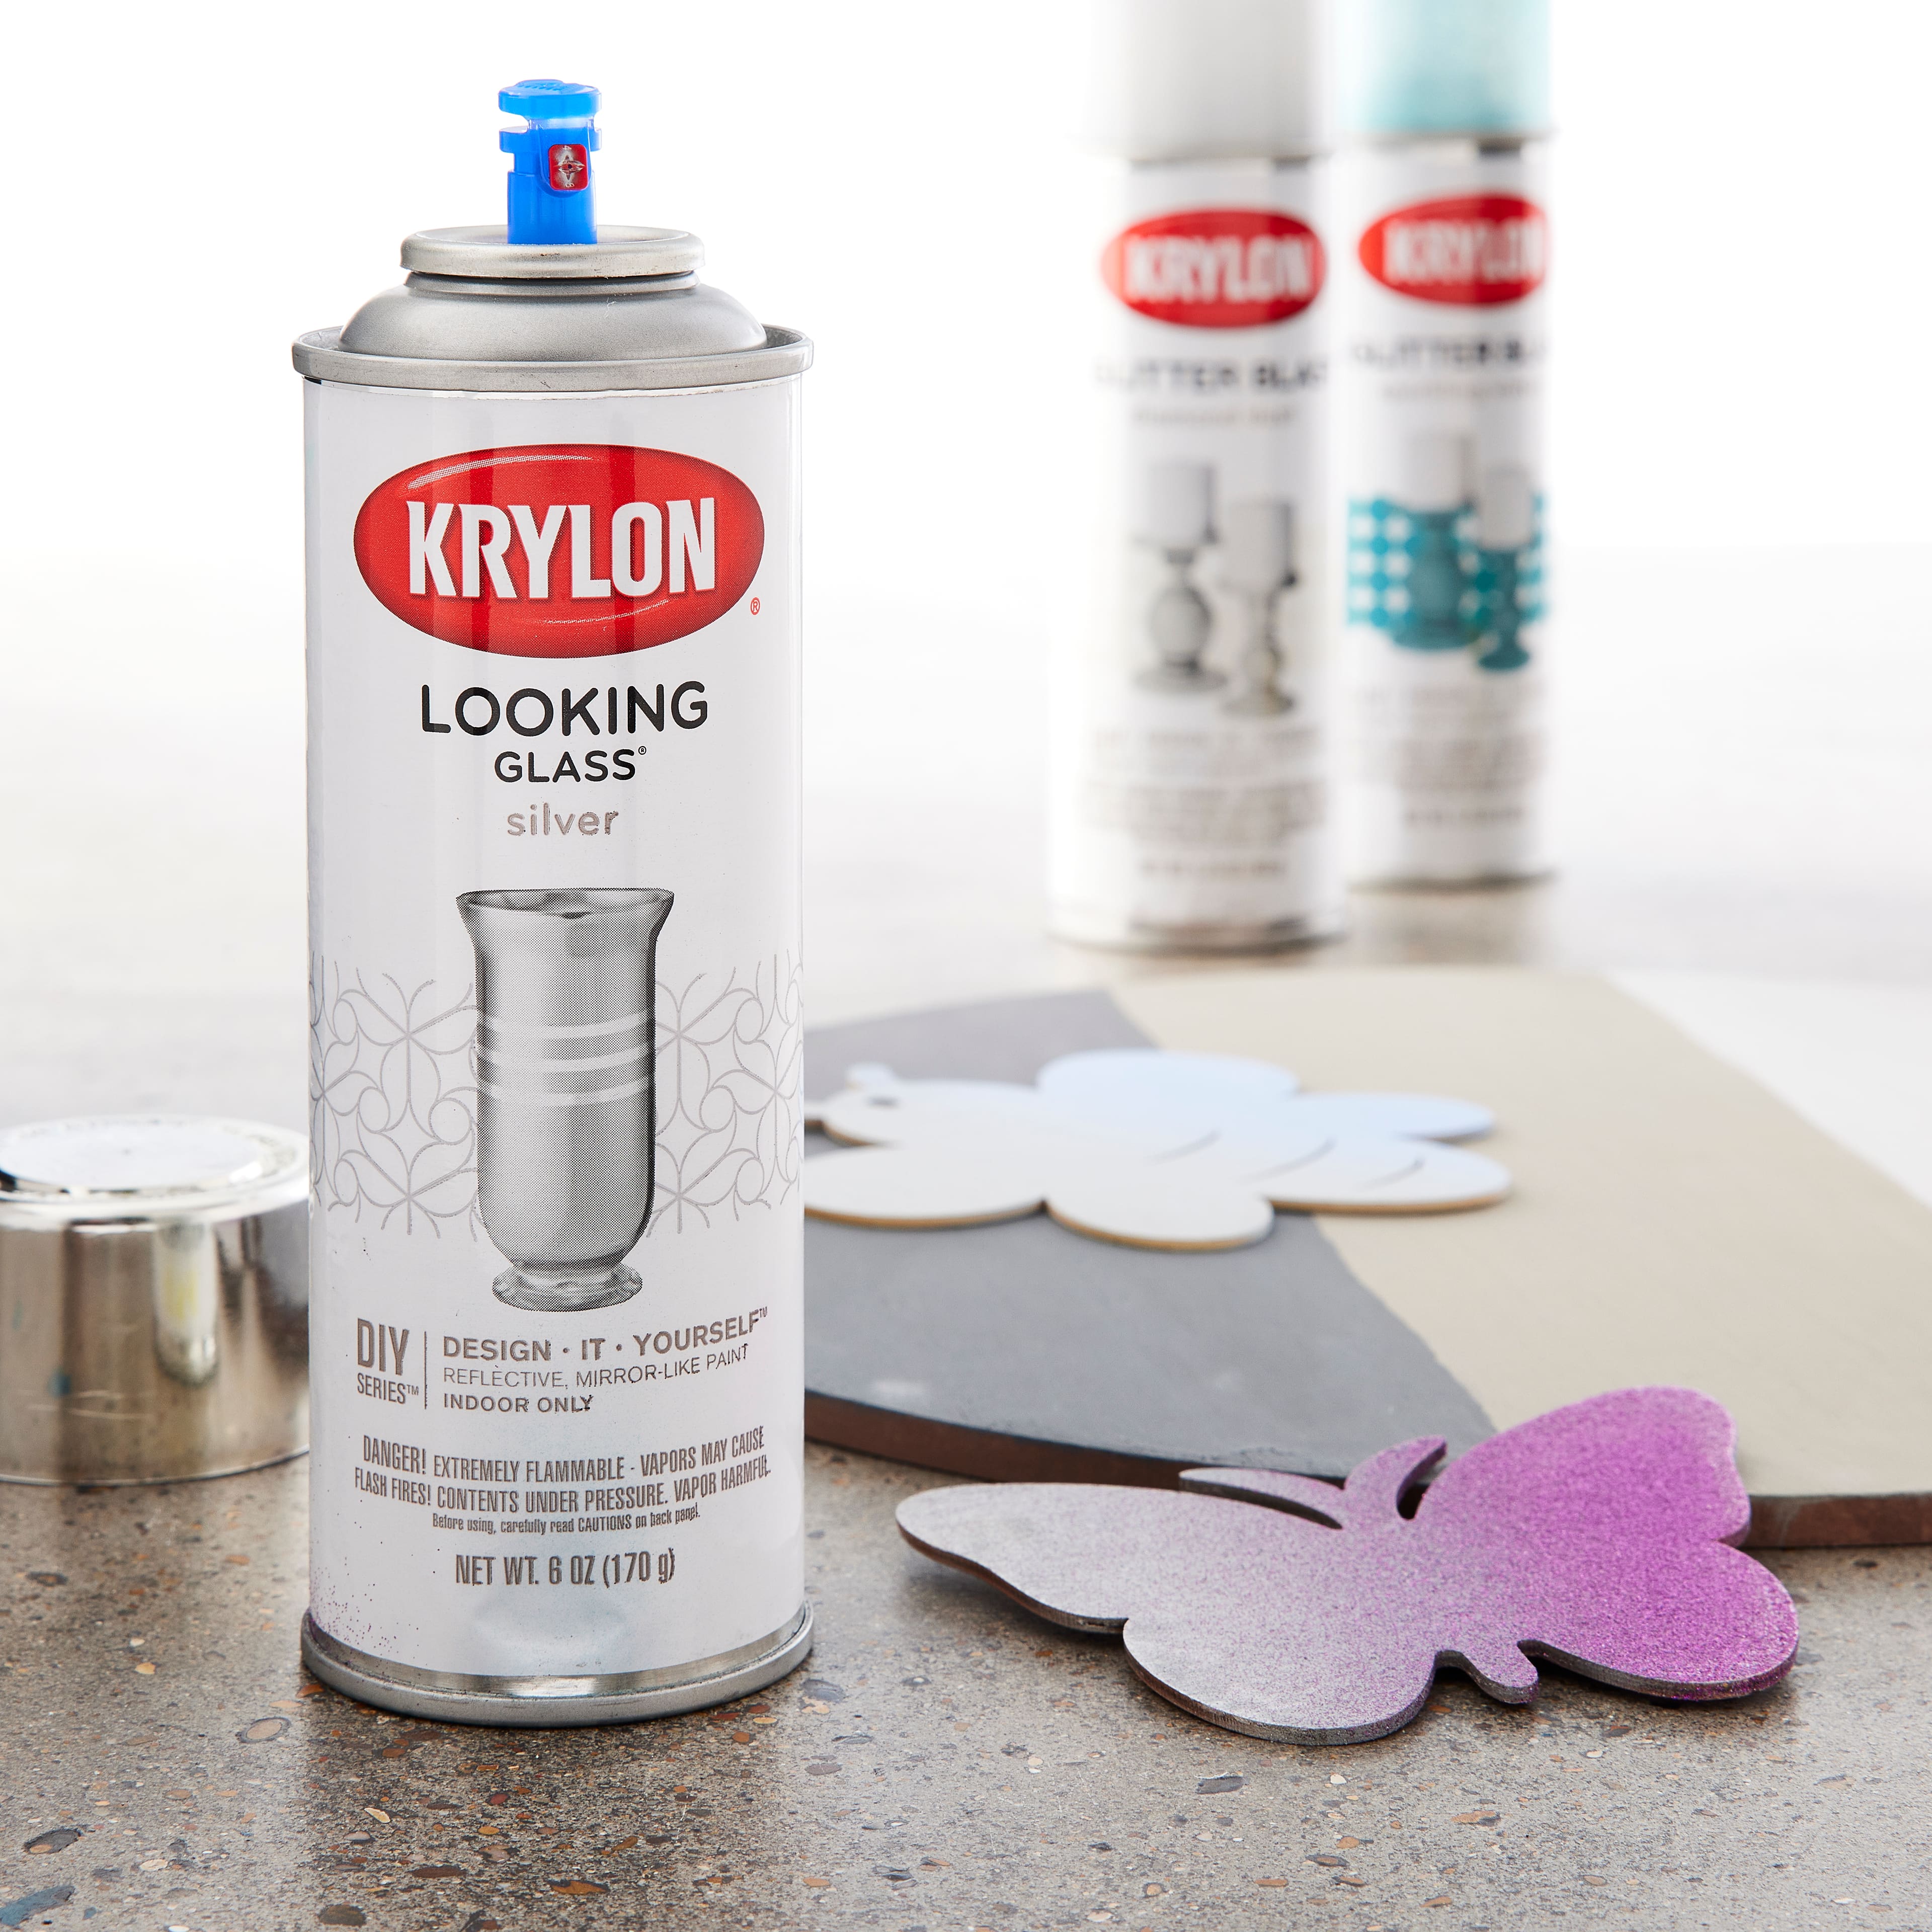 Krylon Silver Looking Glass Spray Paint - 6 oz